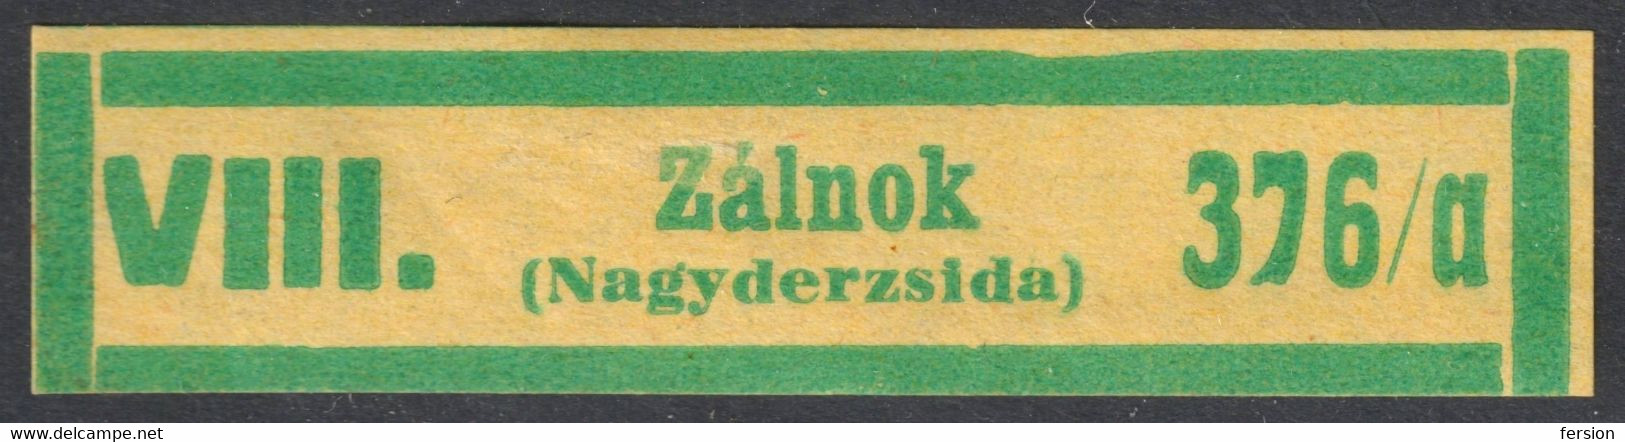 ZÁLNOK Bobota POST Office Internal Registered Label Vignette WW2 War HUNGARY Occupation ROMANIA Transylvania 1940 - Transylvania